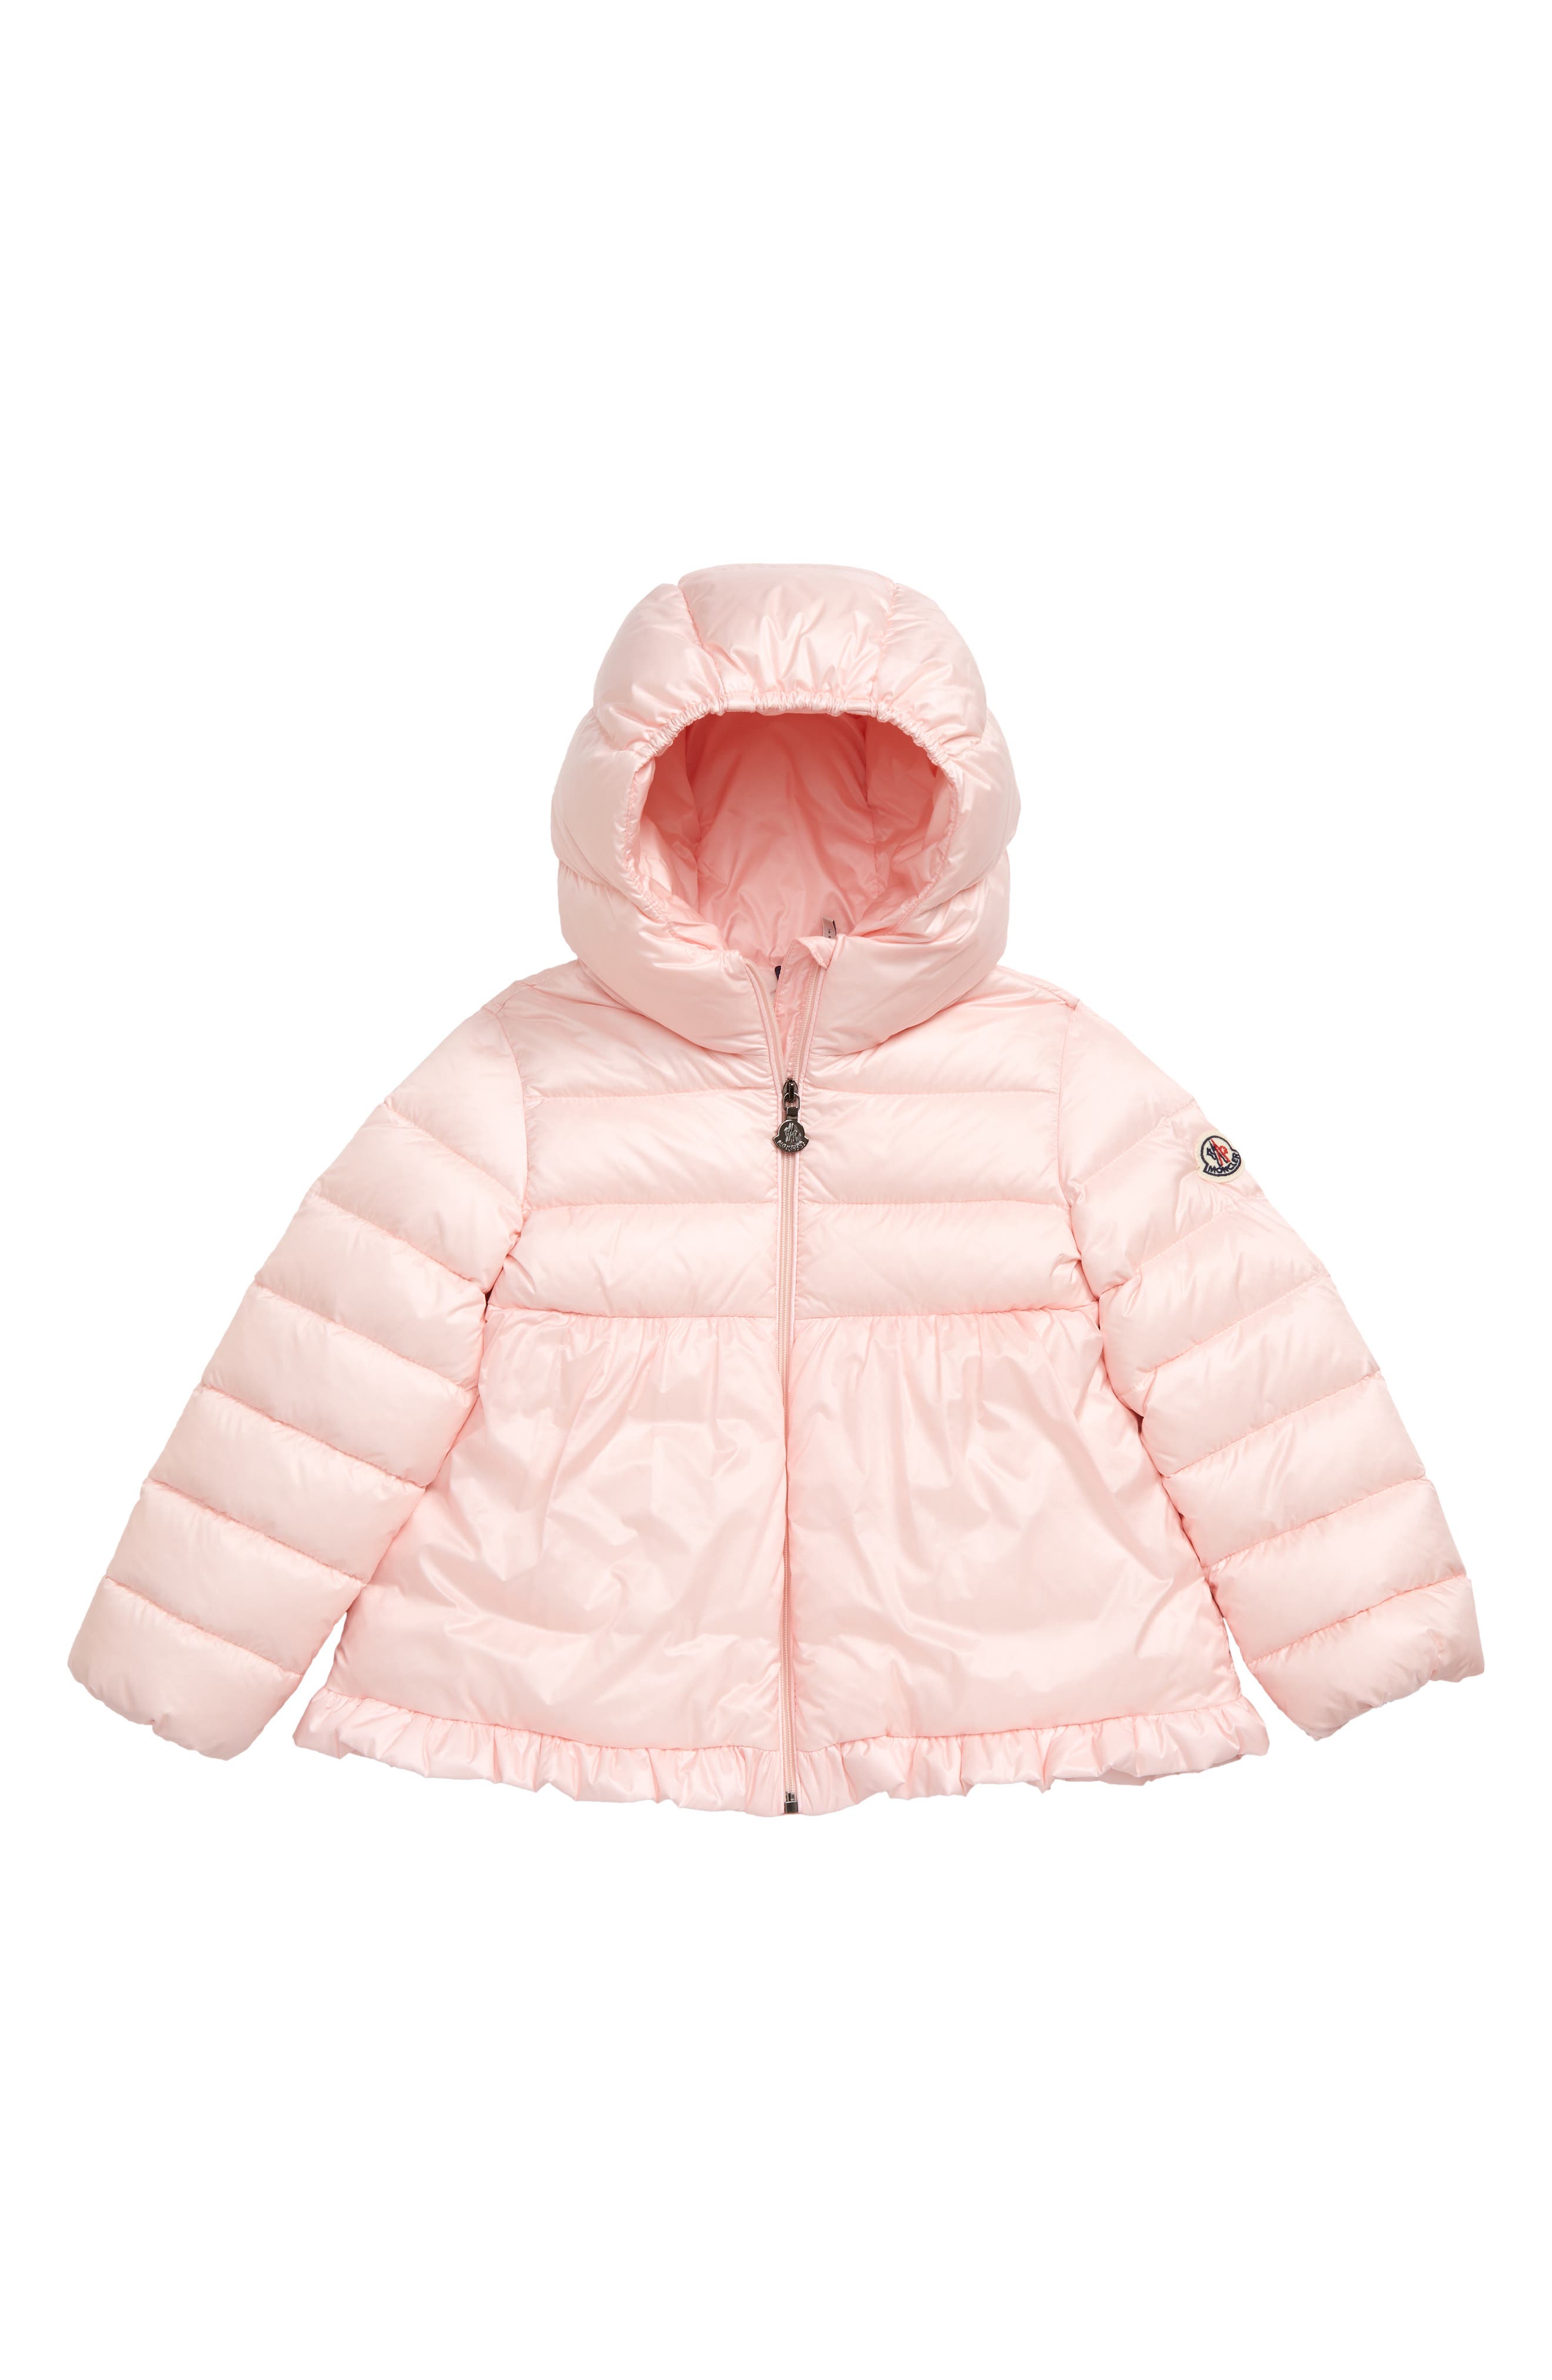 moncler baby girl jacket sale